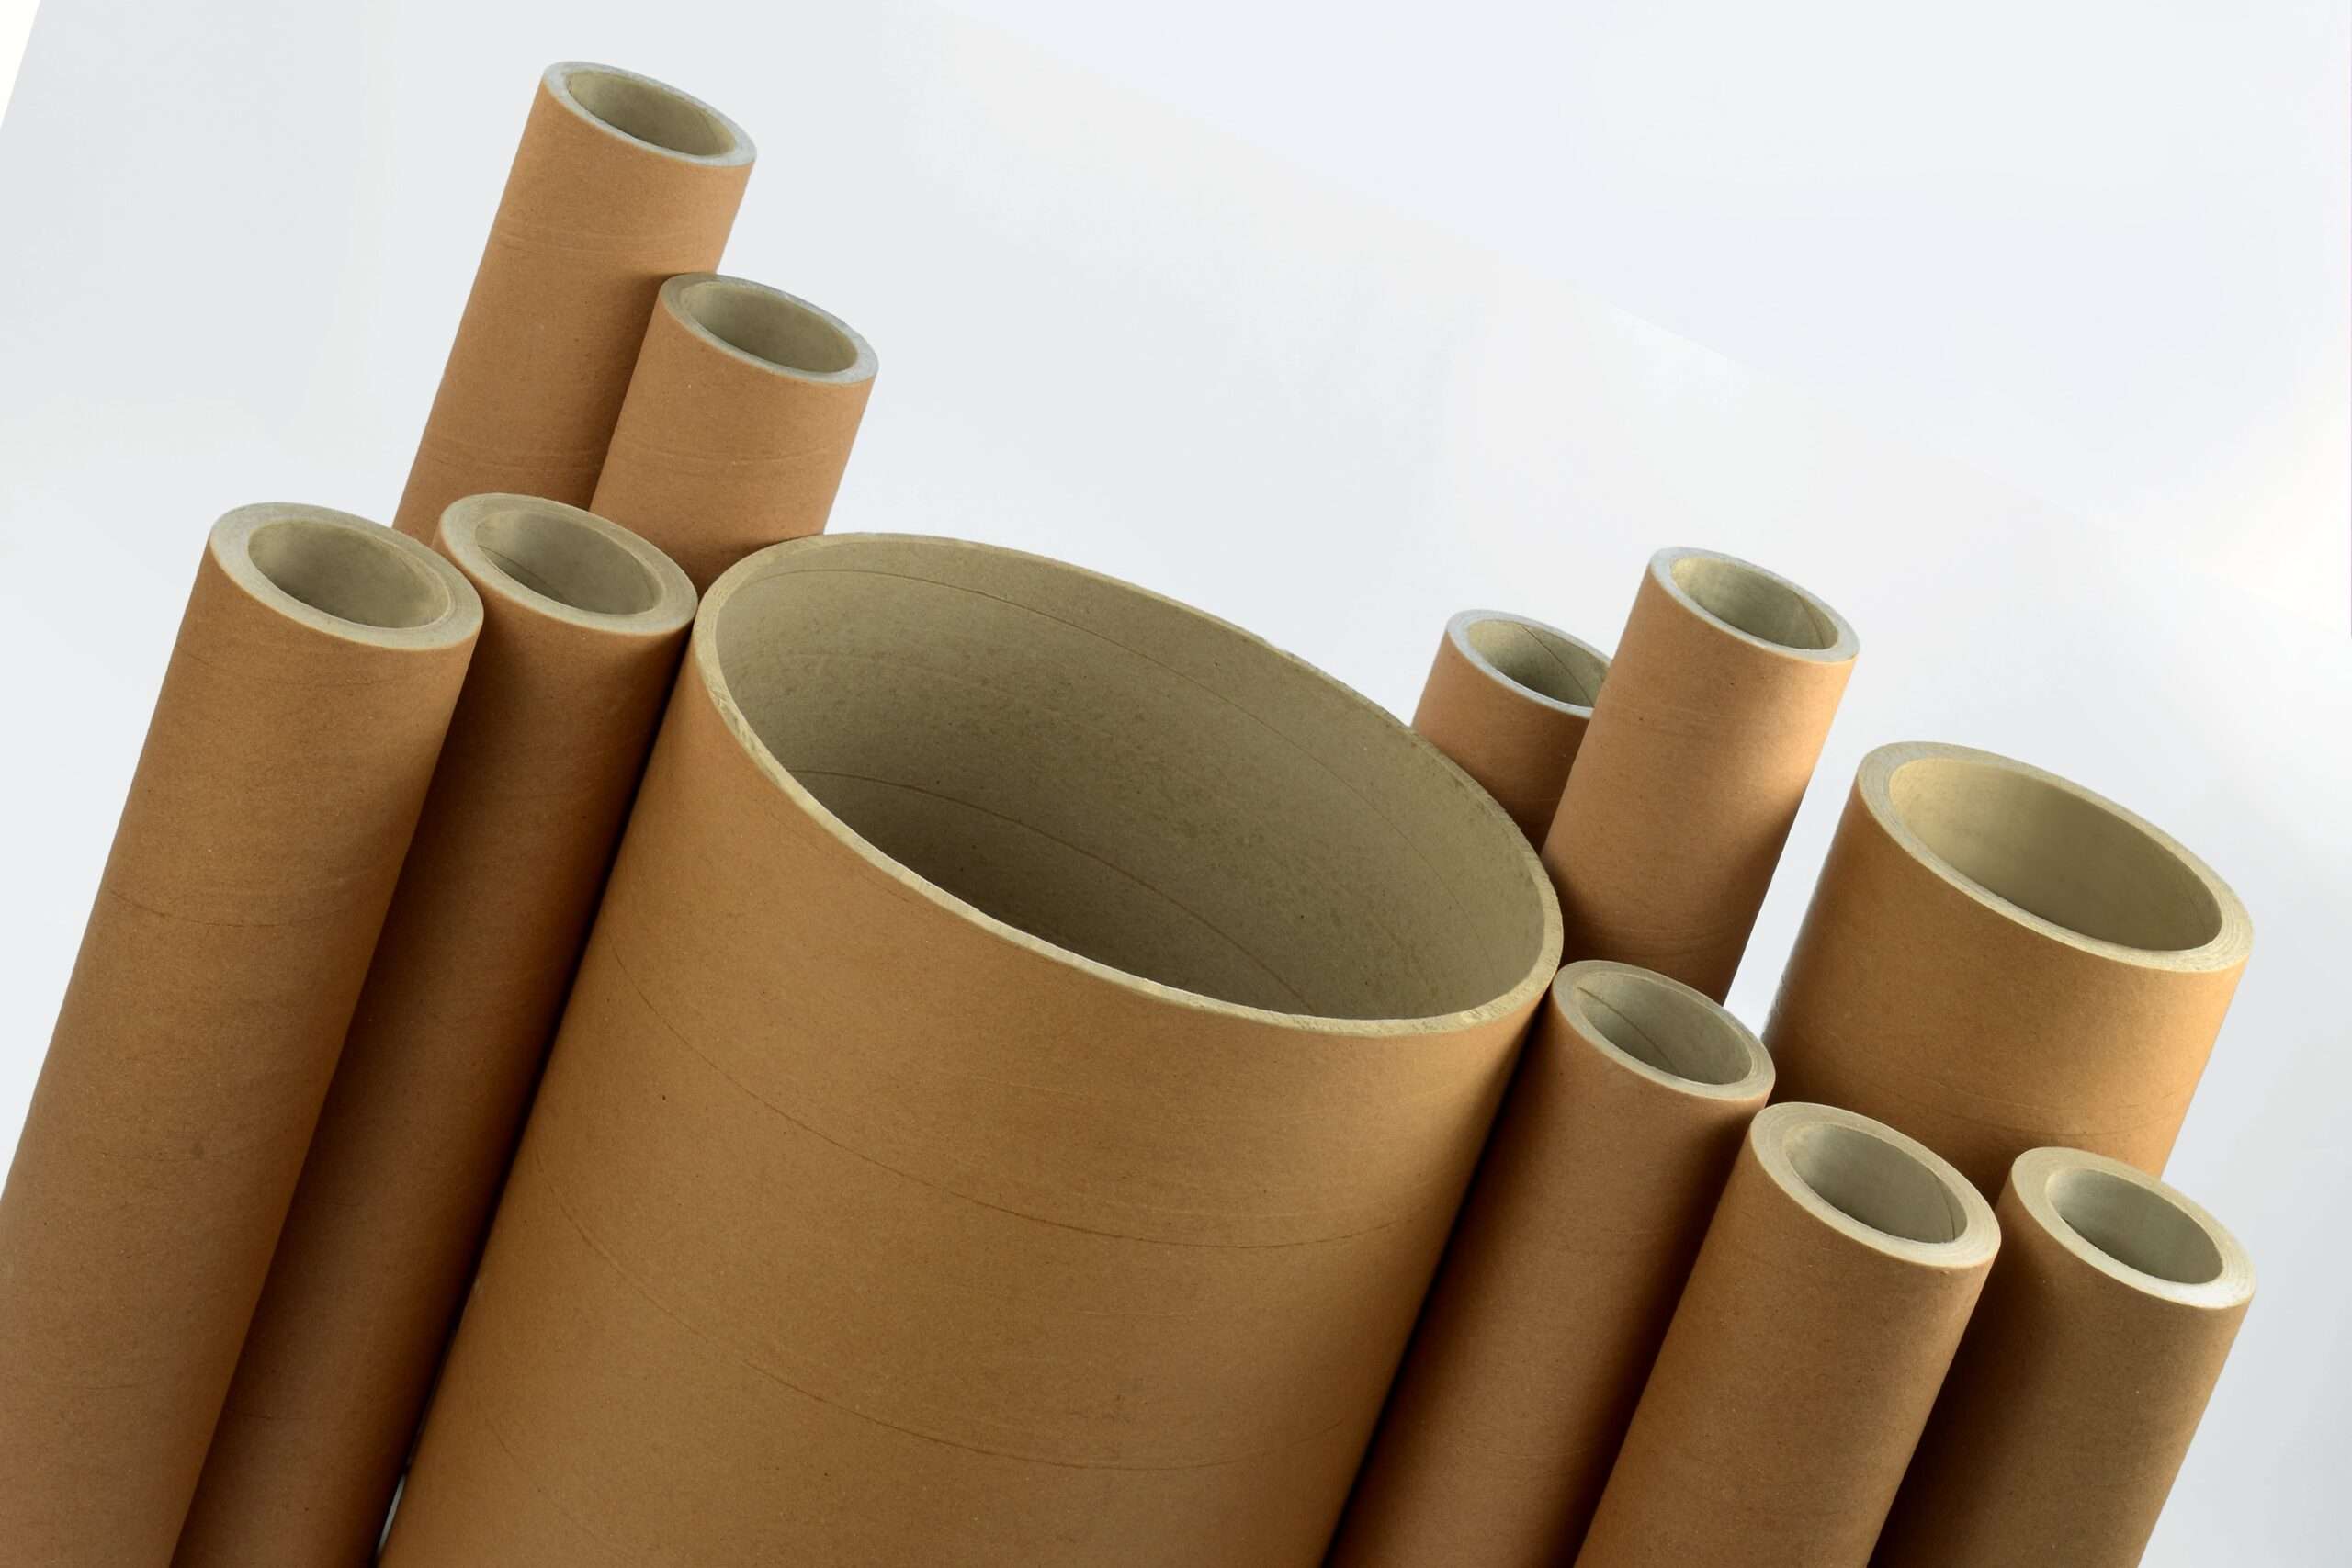 paper tube cores